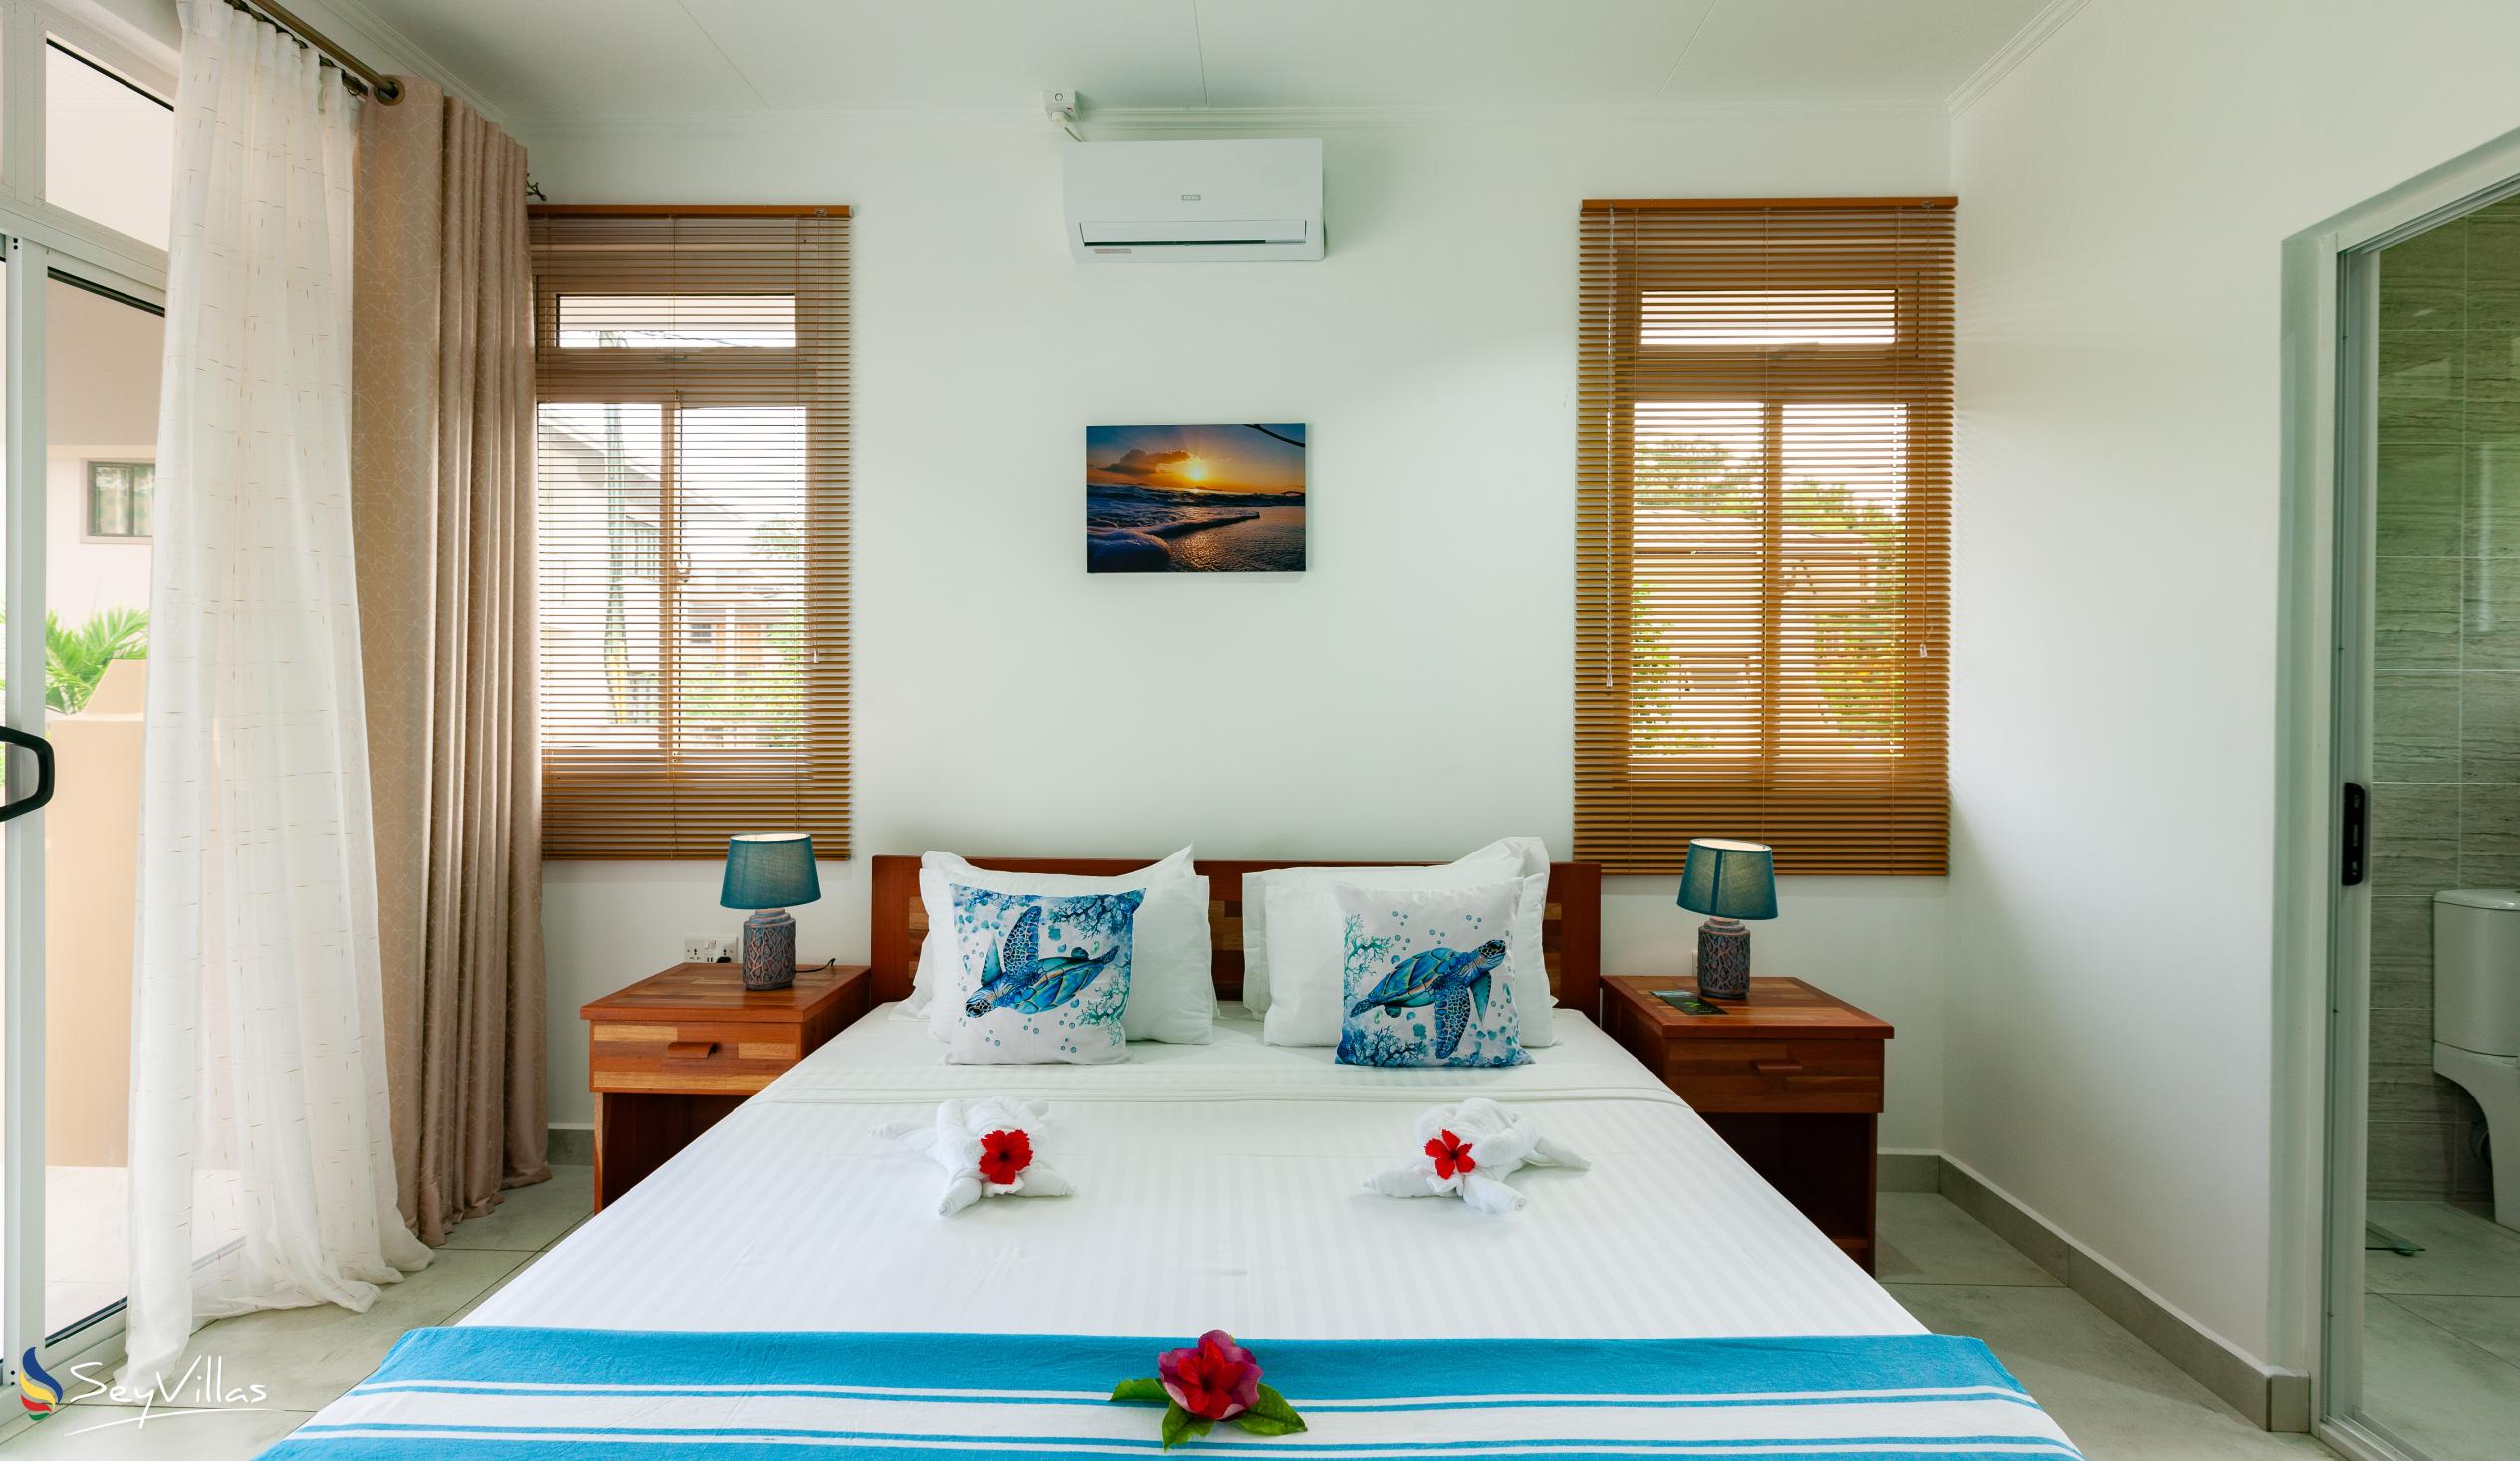 Photo 42: MacMillan's Holiday Villas - 2-Bedroom Chalet - Praslin (Seychelles)